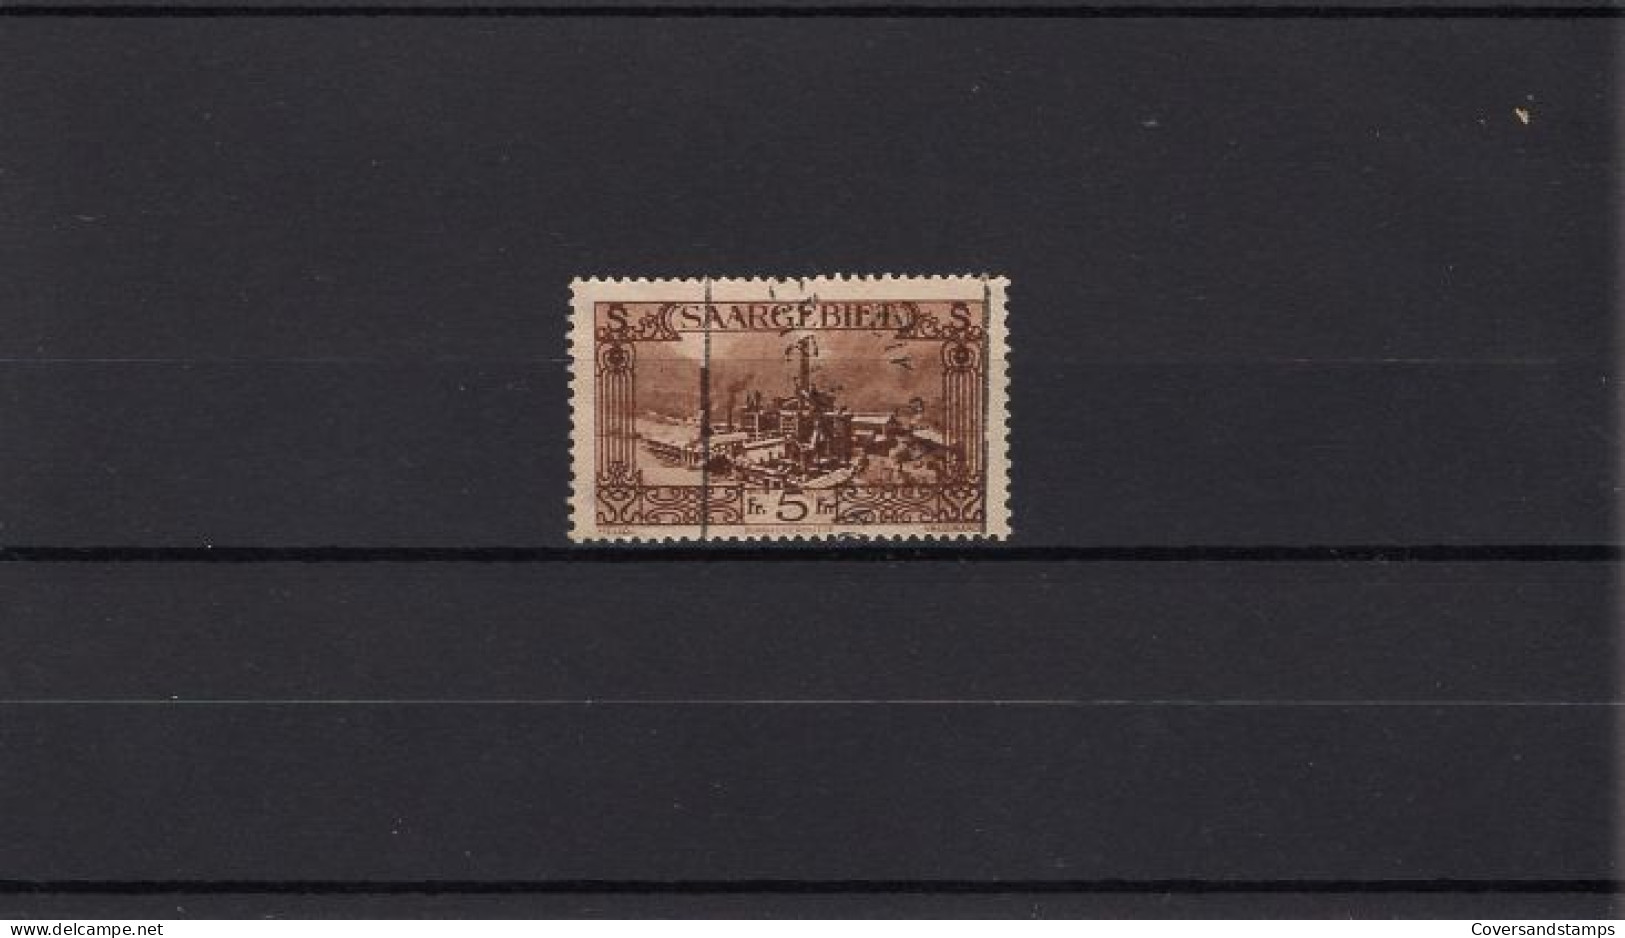   Saargebiet - 121  Gestempeld / Oblitéré / Cancelled - Used Stamps